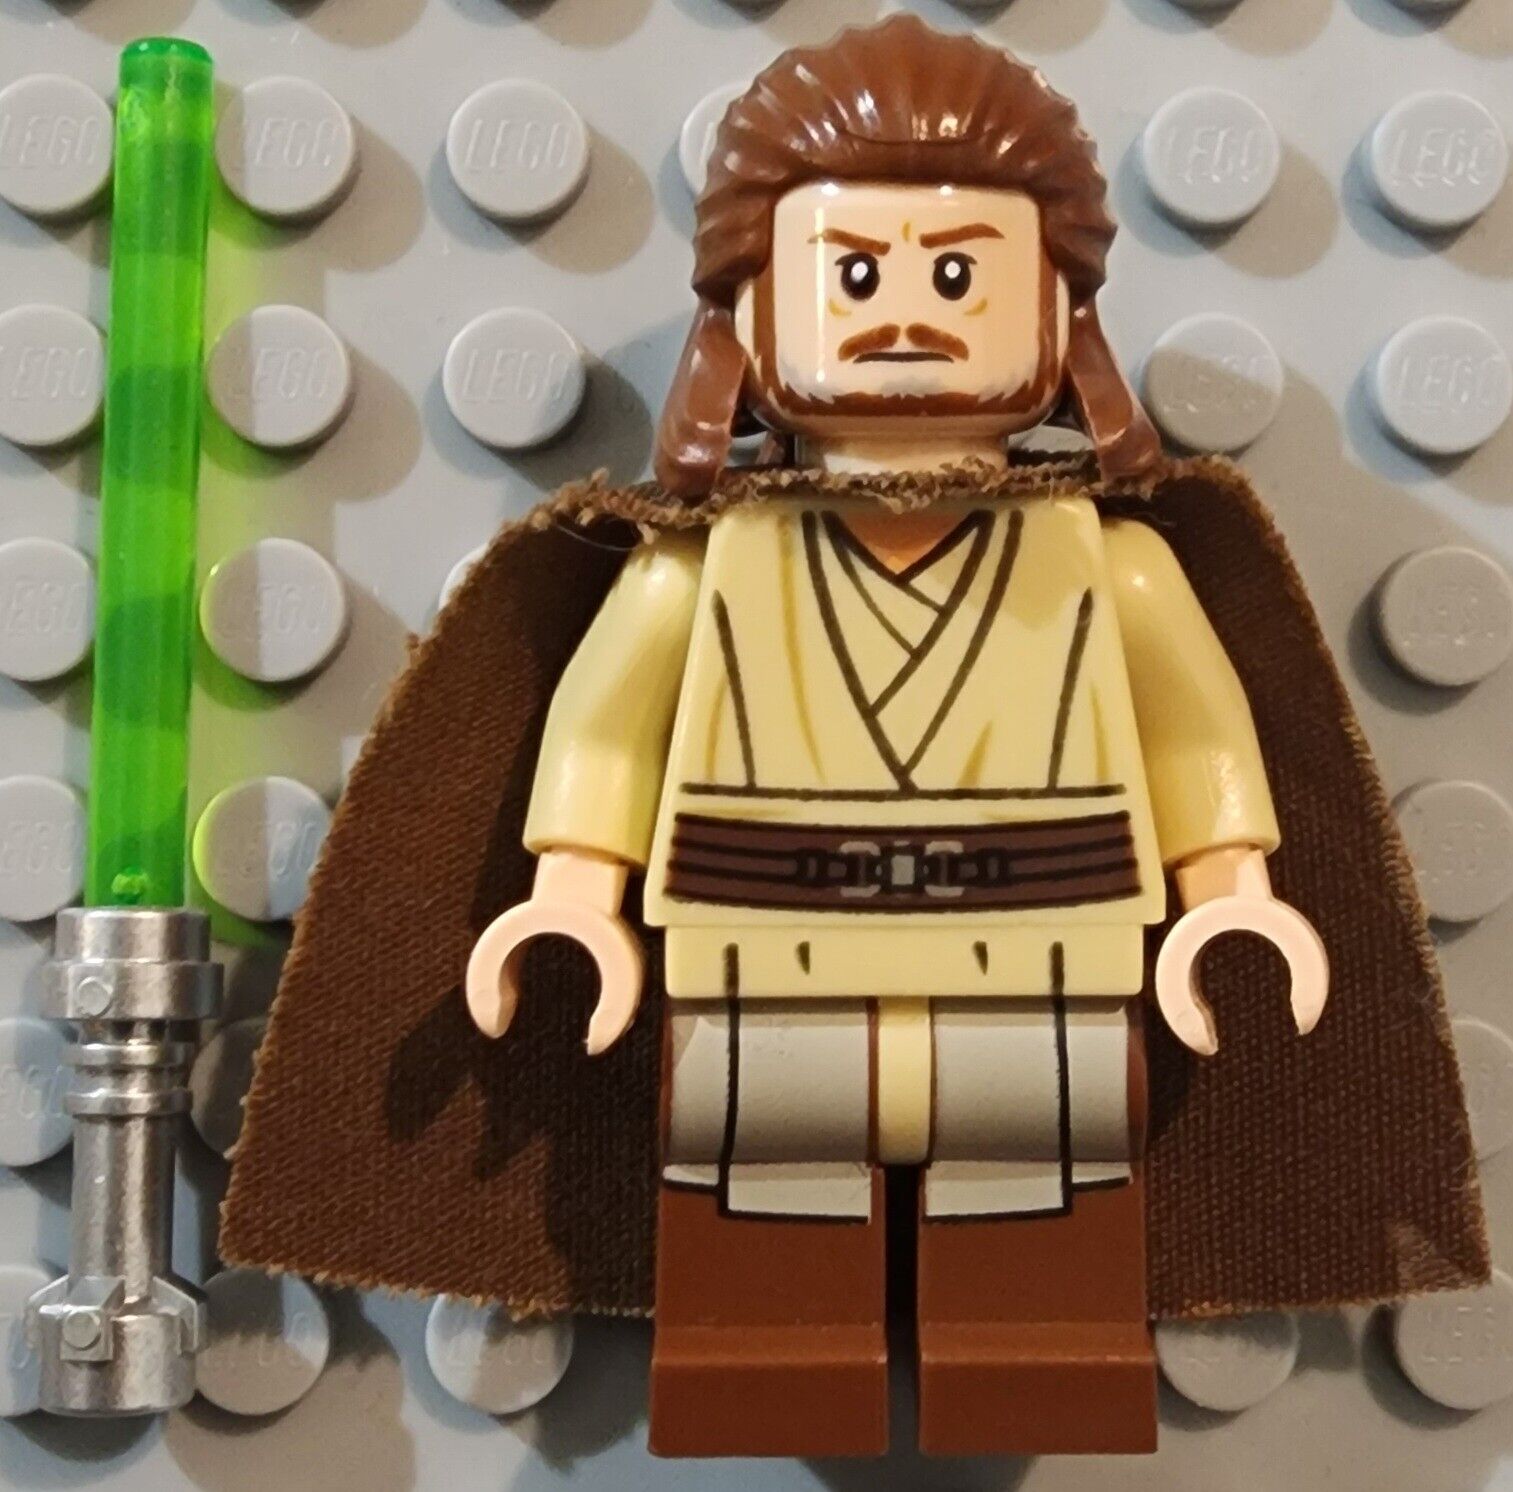 Lego Star Wars Qui-Gon Jinn Minifigure SW0810 from set 75169